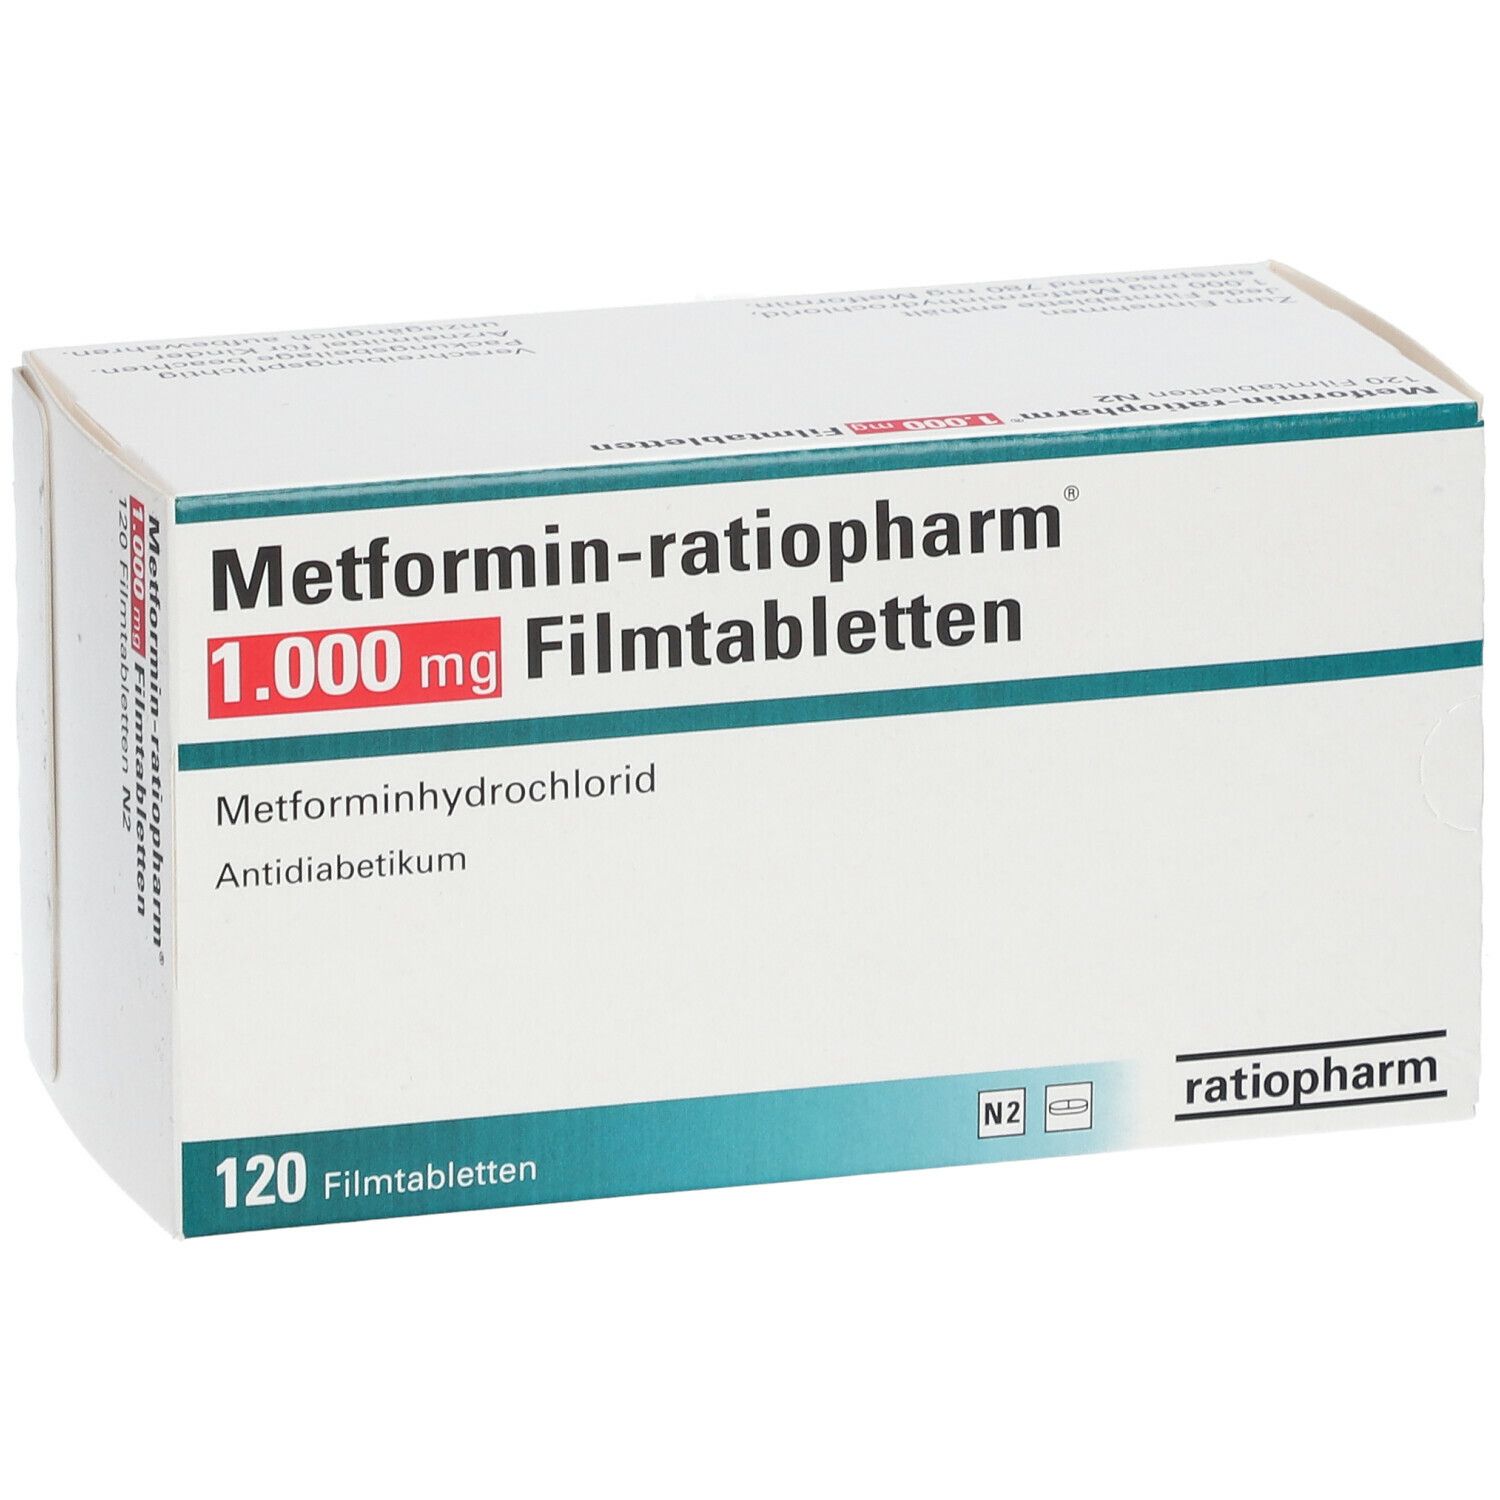 Metformin-ratiopharm® 1000 mg